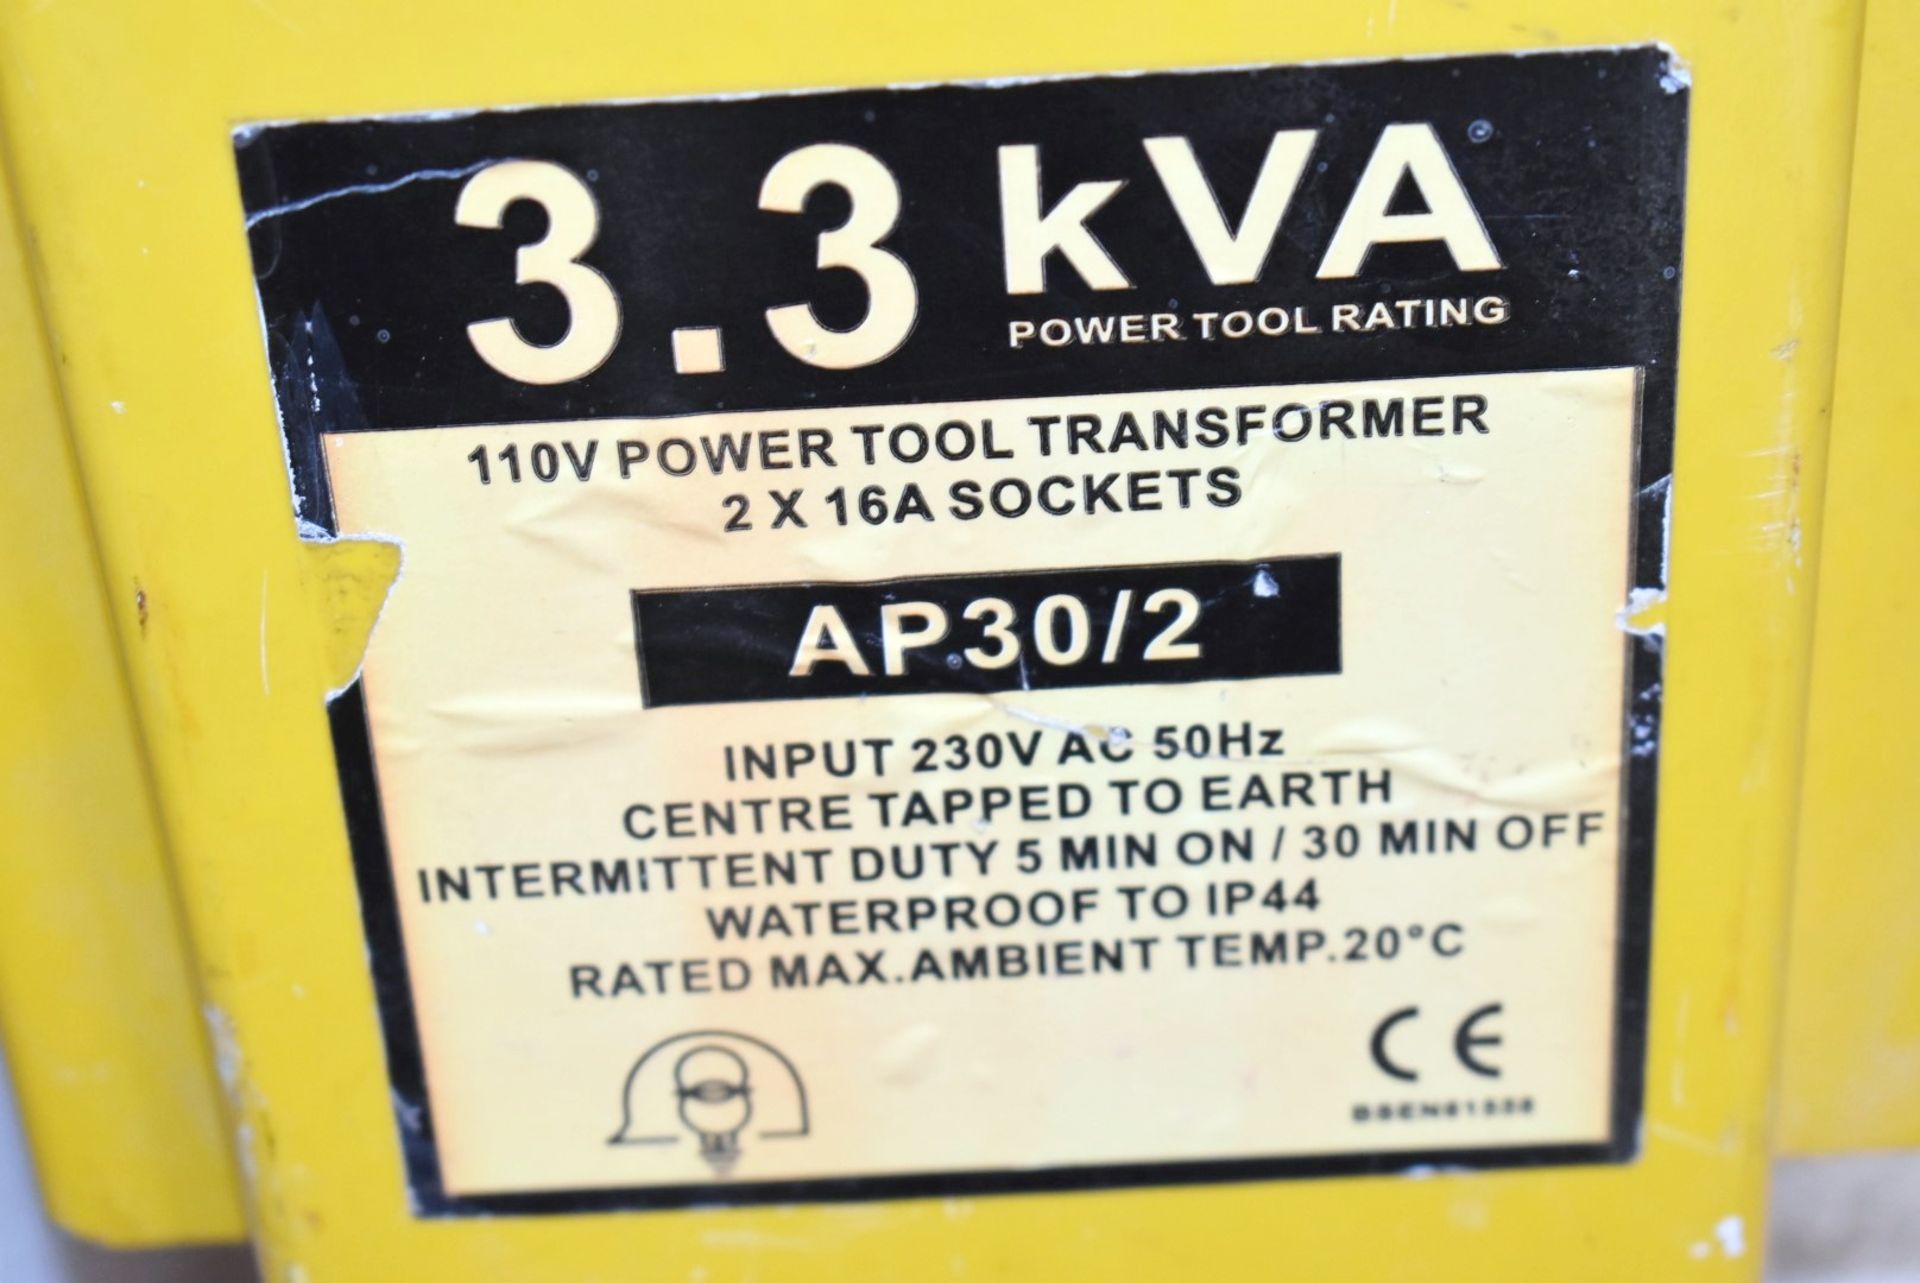 1 x Site Transformer For 110v Tools and Lighting - 3.3kva - 2 x 16A Sockets - 240v to 110v - Image 4 of 4